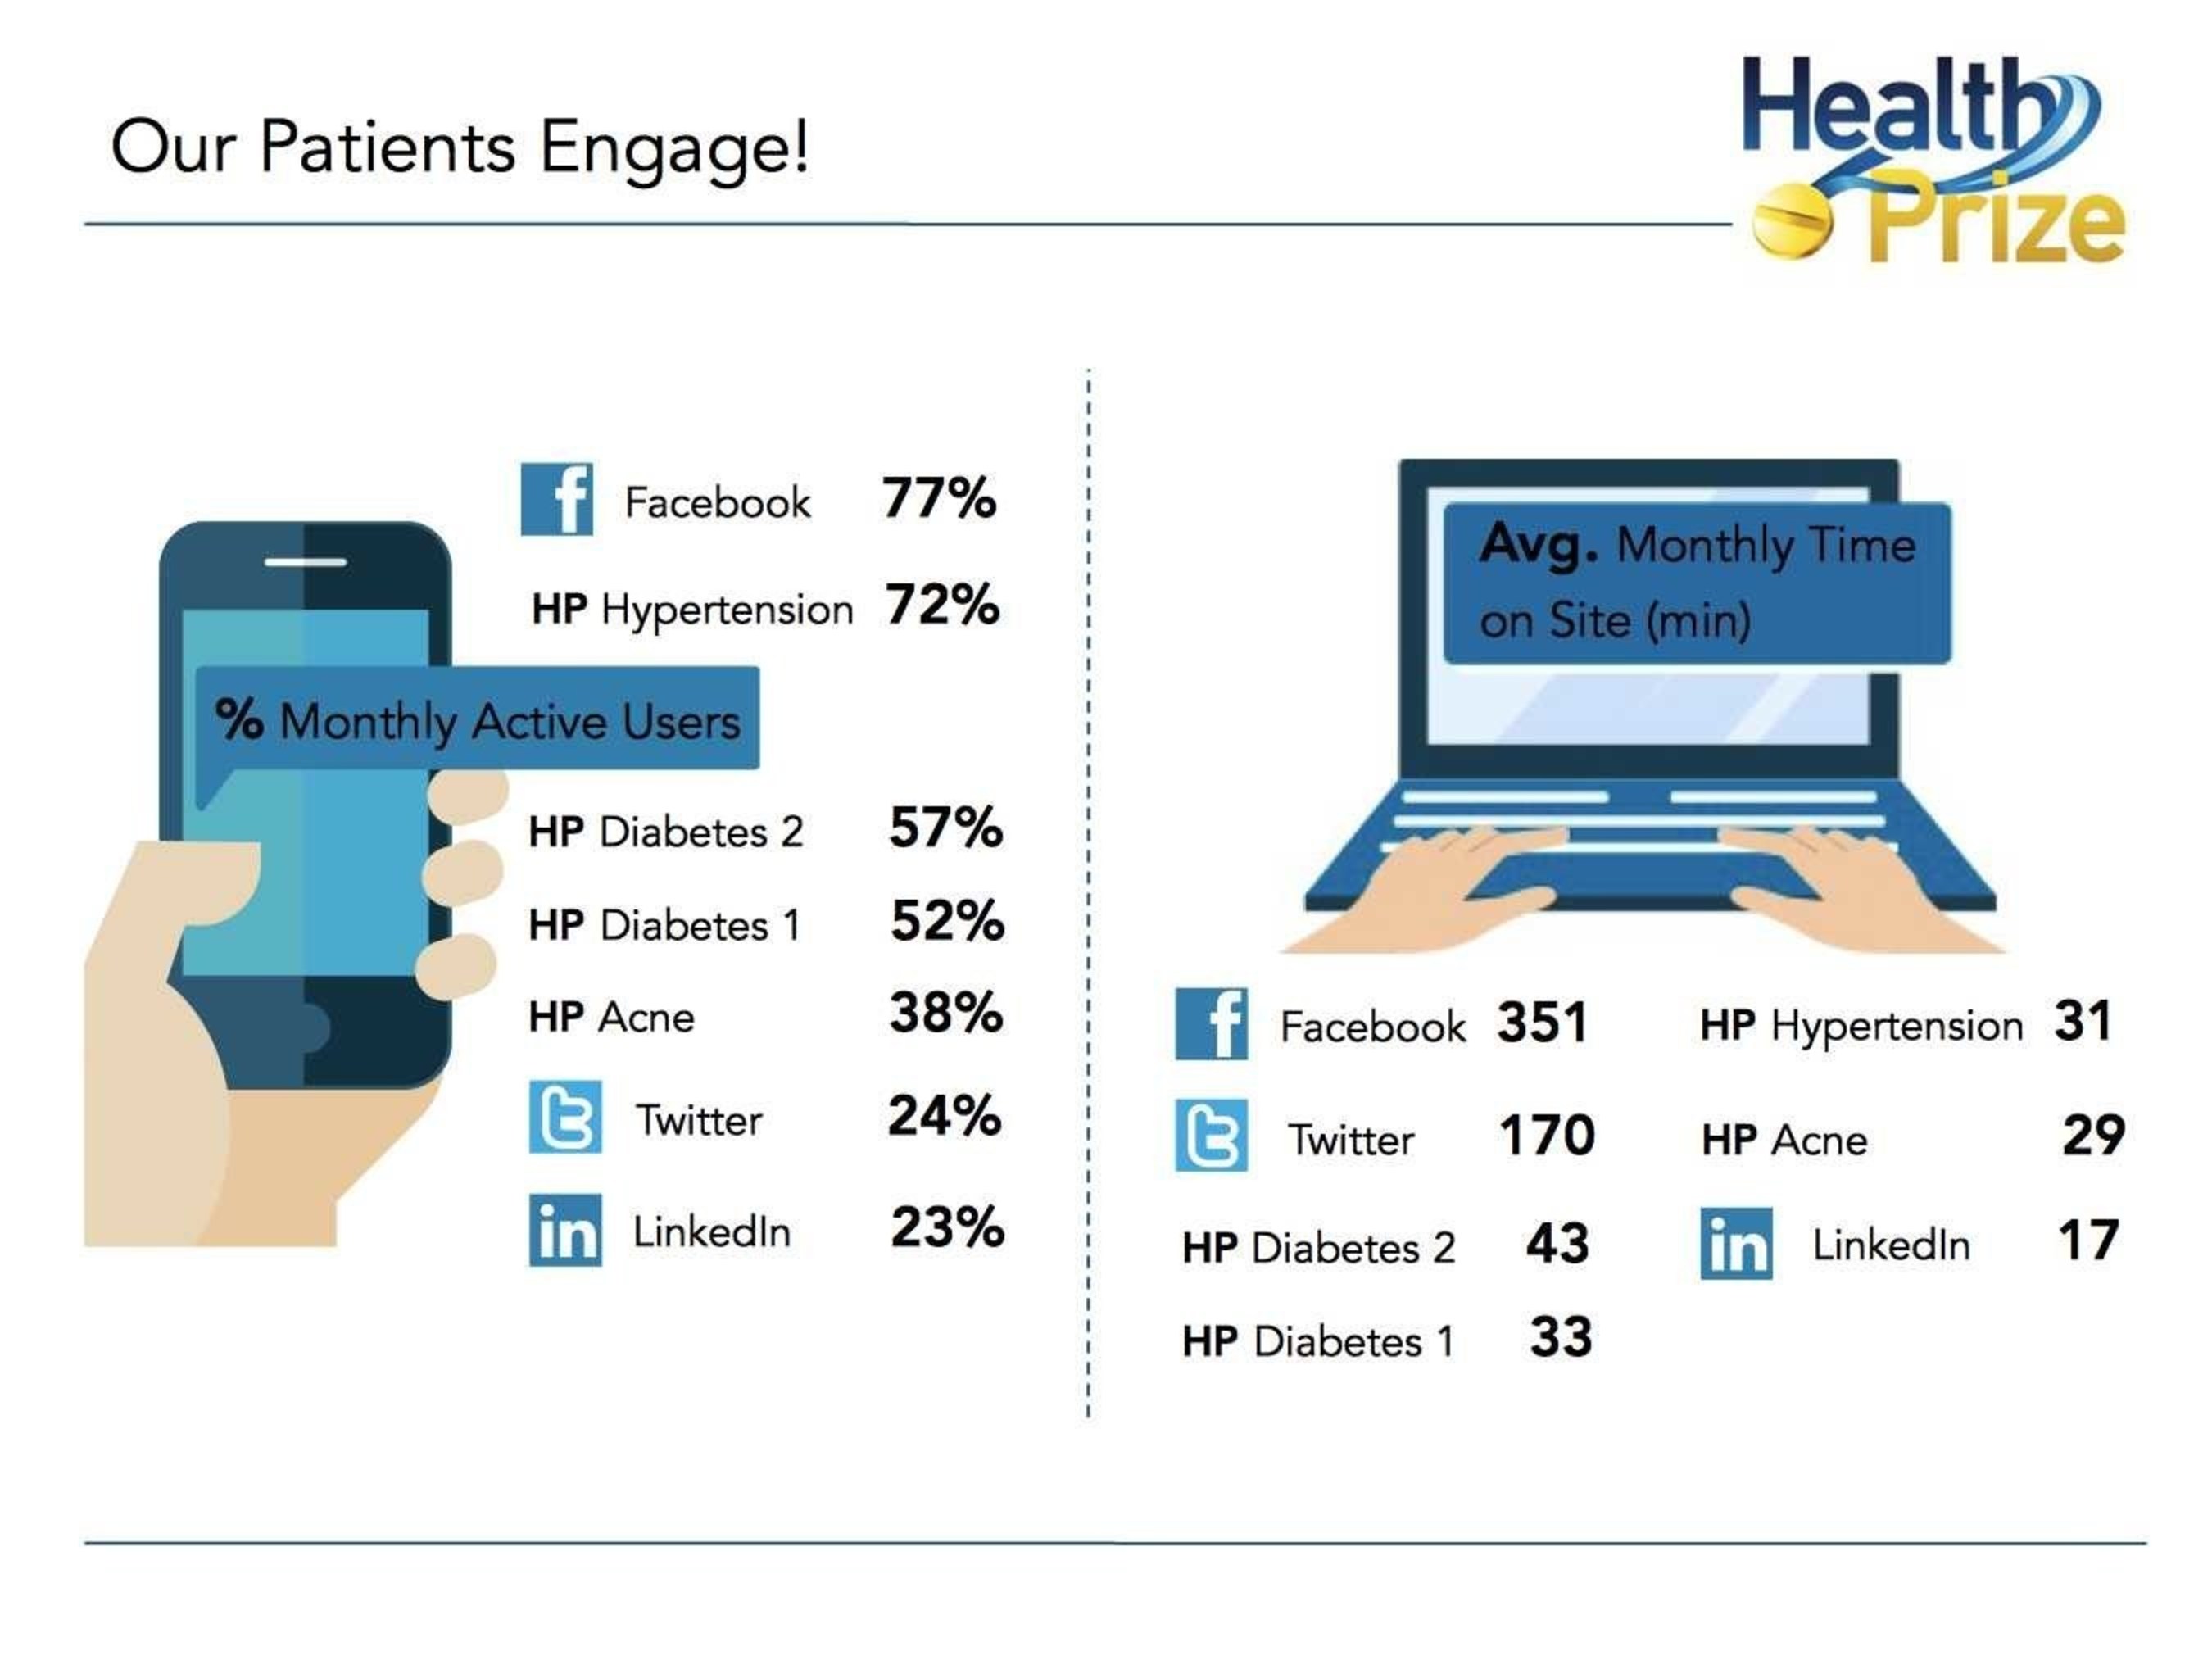 HealthPrize program engagement levels rival those of social media.